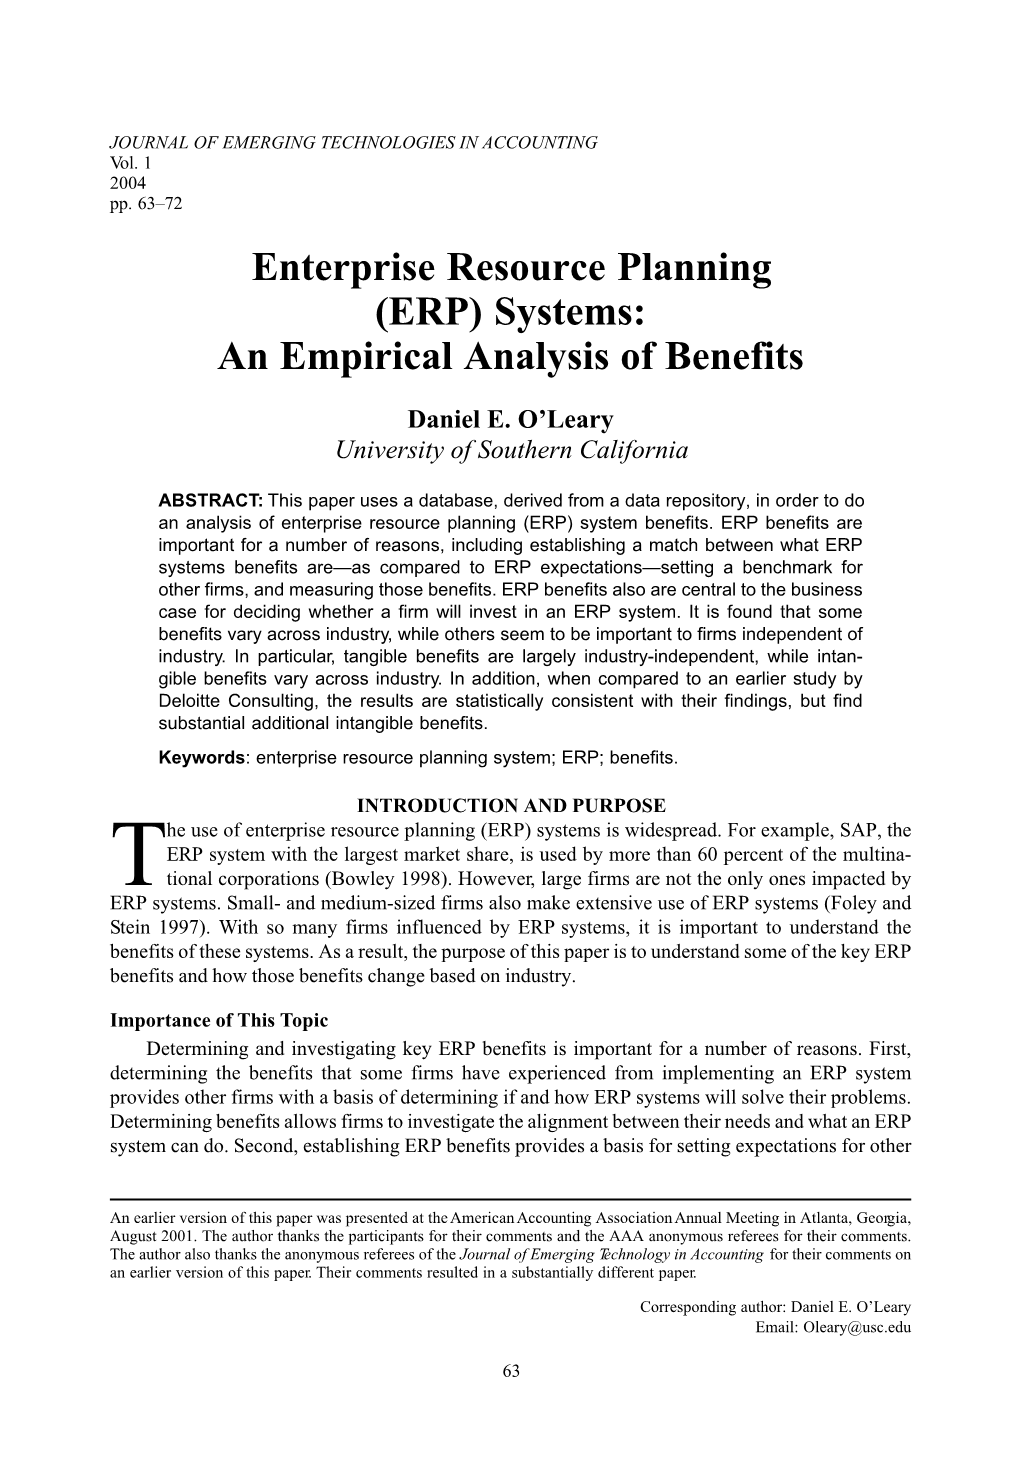 Enterprise Resource Planning (ERP) Systems: an Empirical Analysis of Benefits